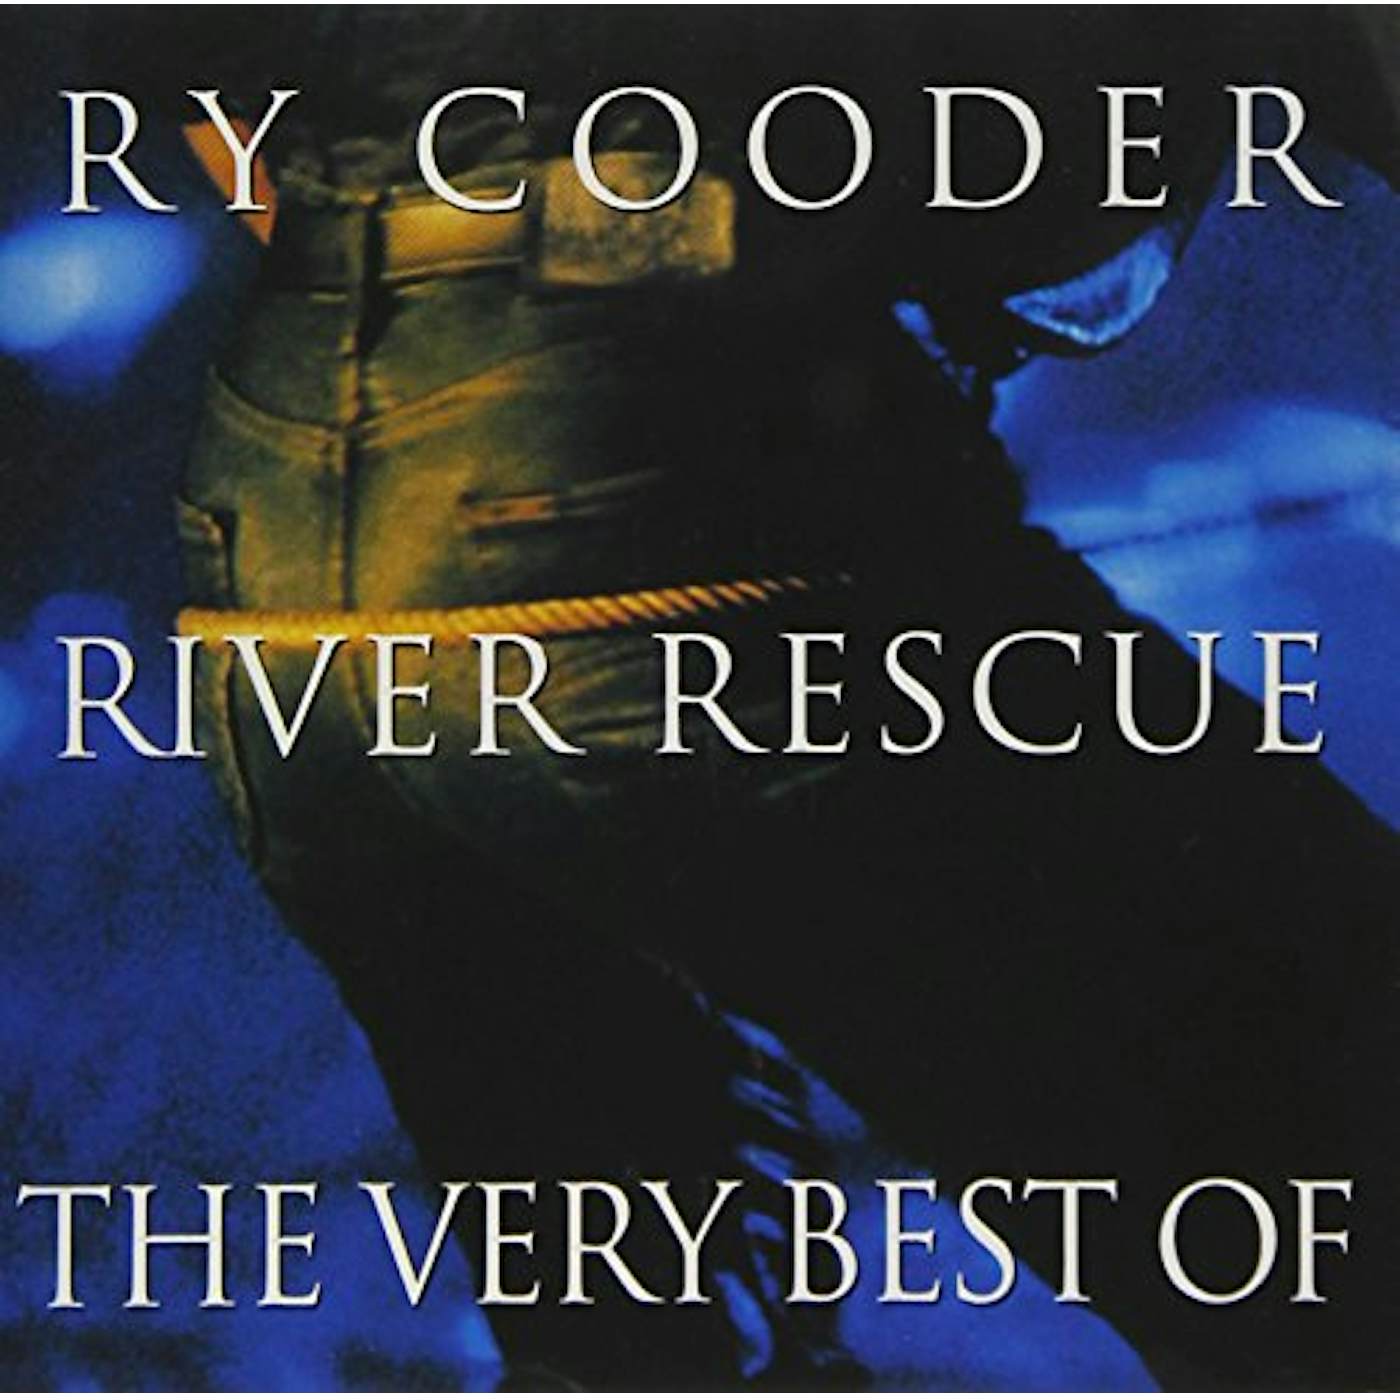 Ry Cooder BEST OF CD